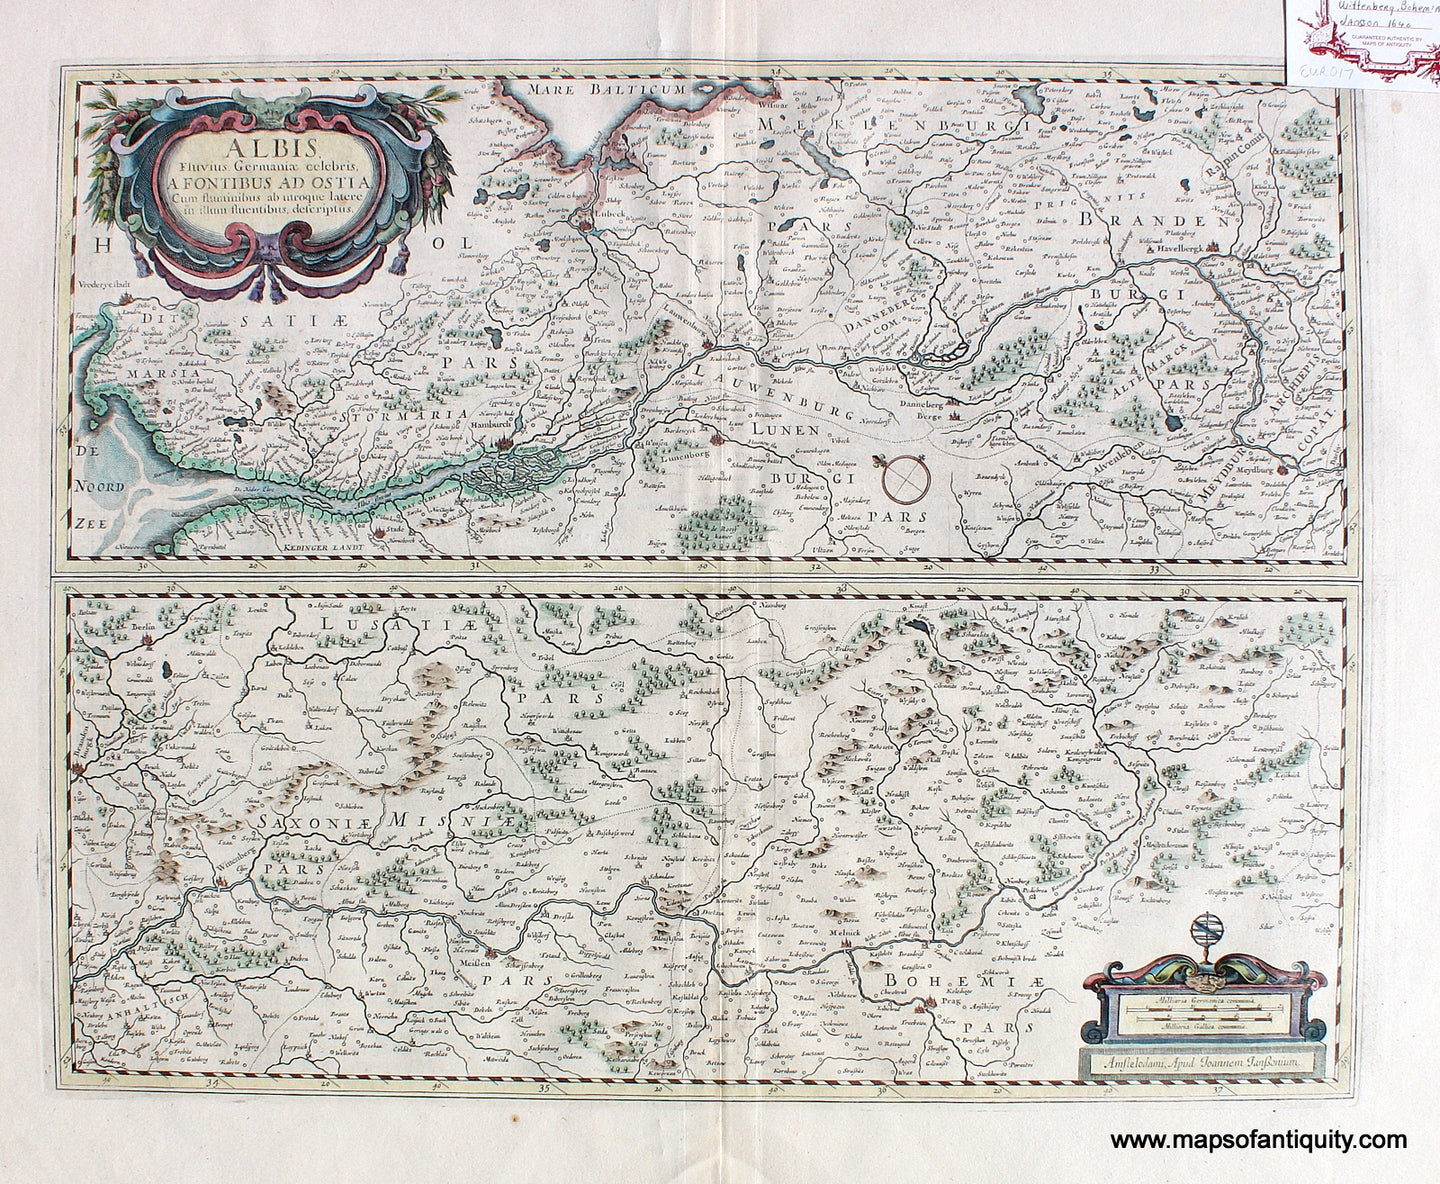 Antique-Hand-Colored-Map-Albis-Fluvius-Germania-celebris-A-Fontibus-ad-Ostia-**********-Europe-Germany-1640-Jansson-Maps-Of-Antiquity